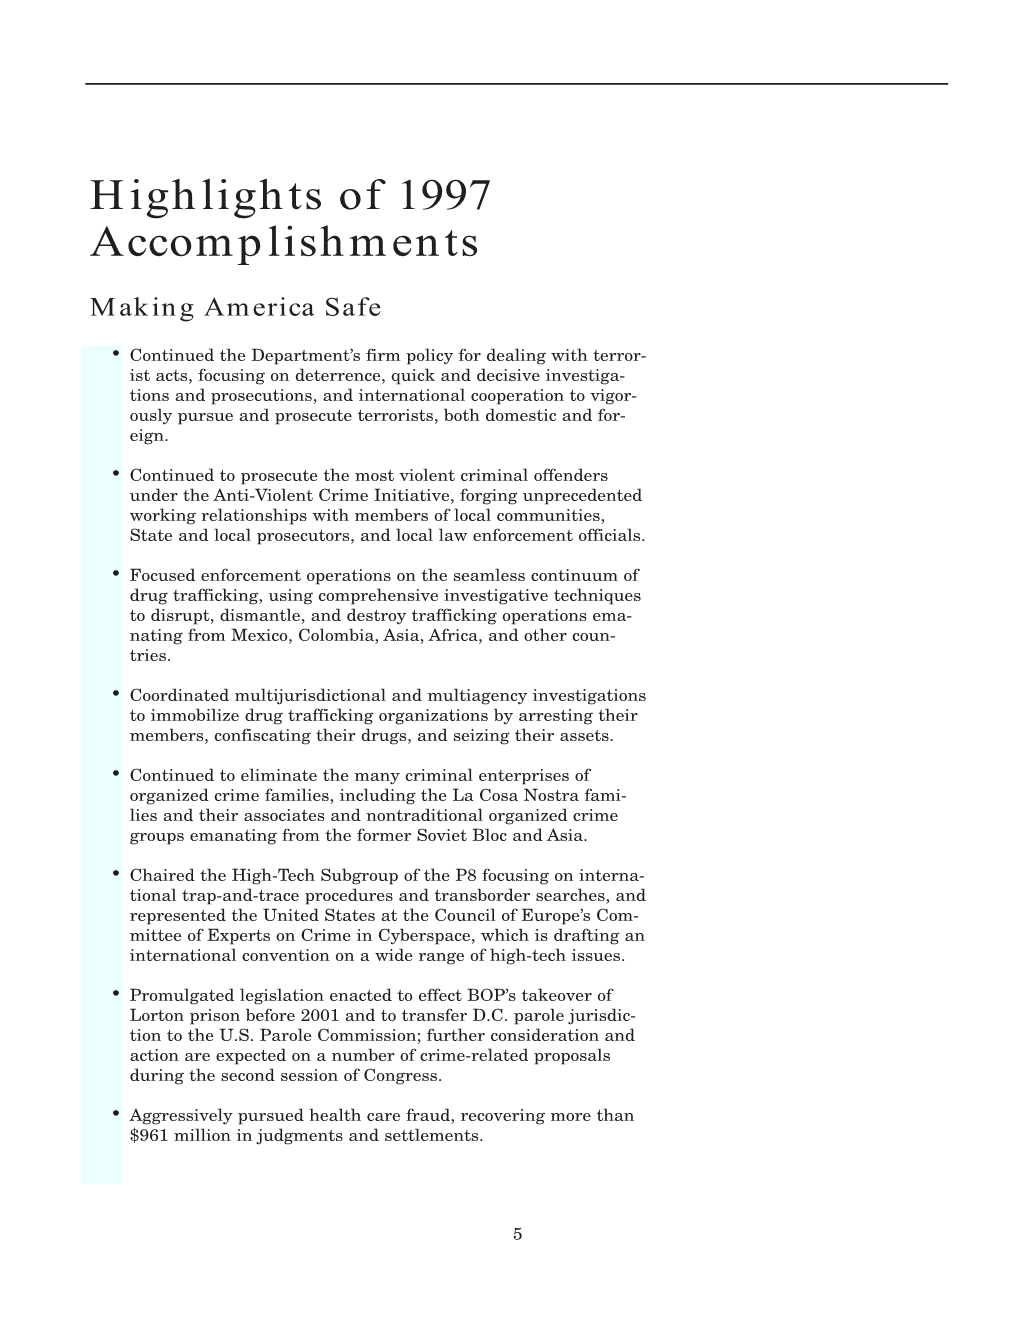 Highlights of 1997 Accomplishments